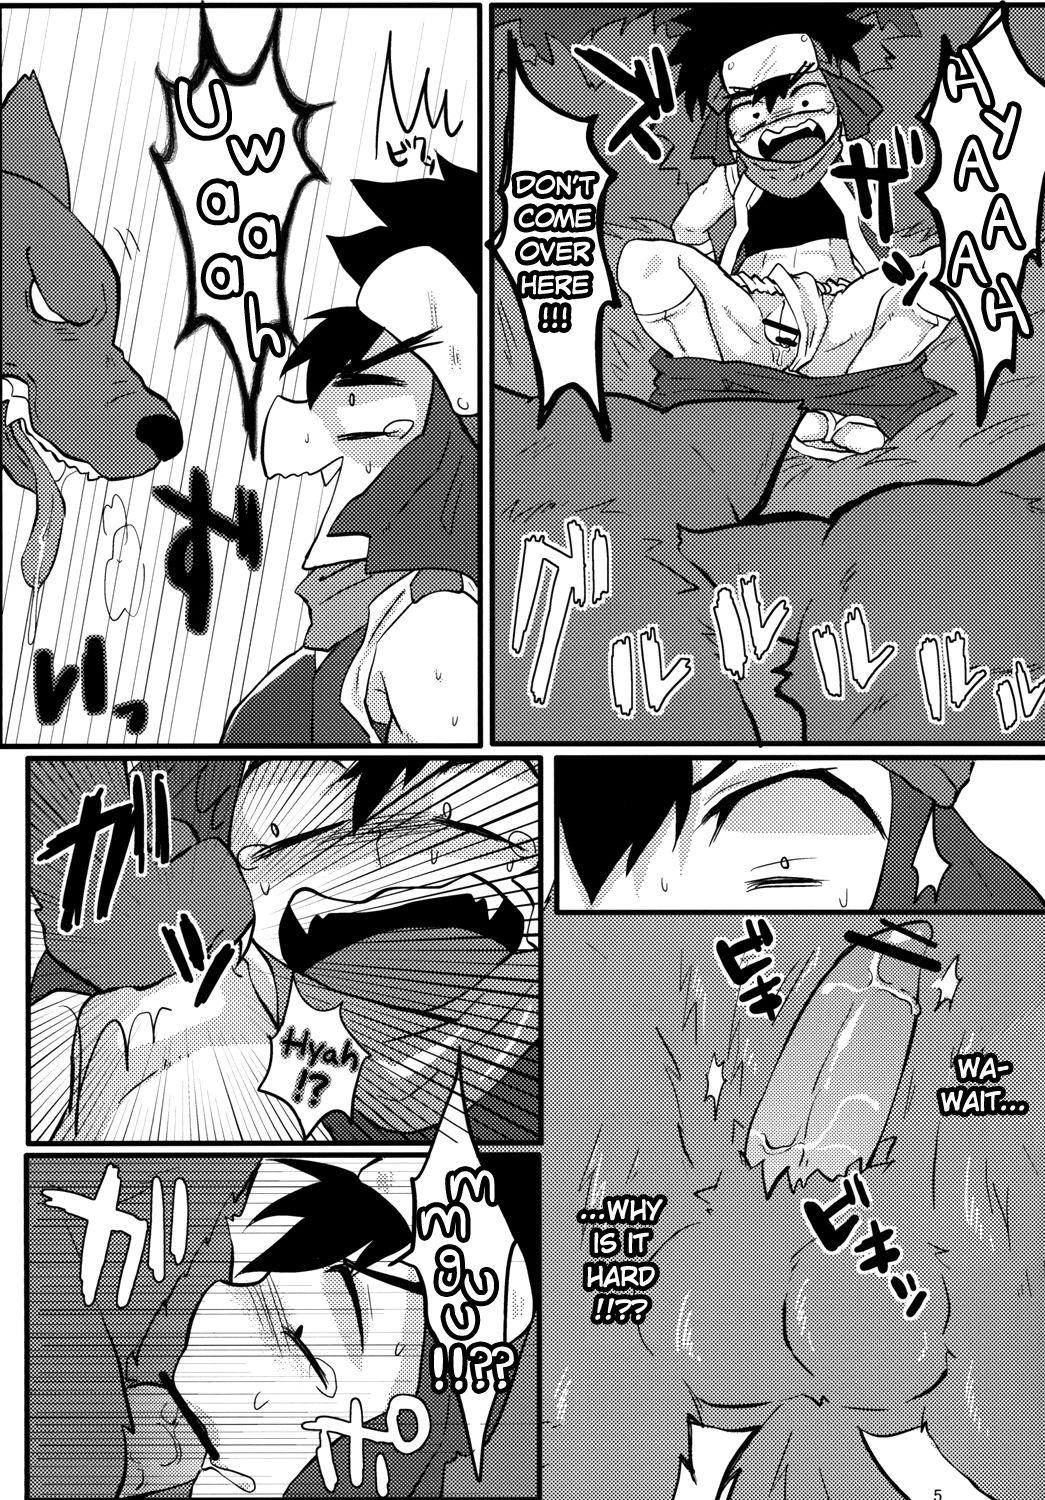 Nurumassage Hagakurape!! - Battle spirits Porno - Page 6